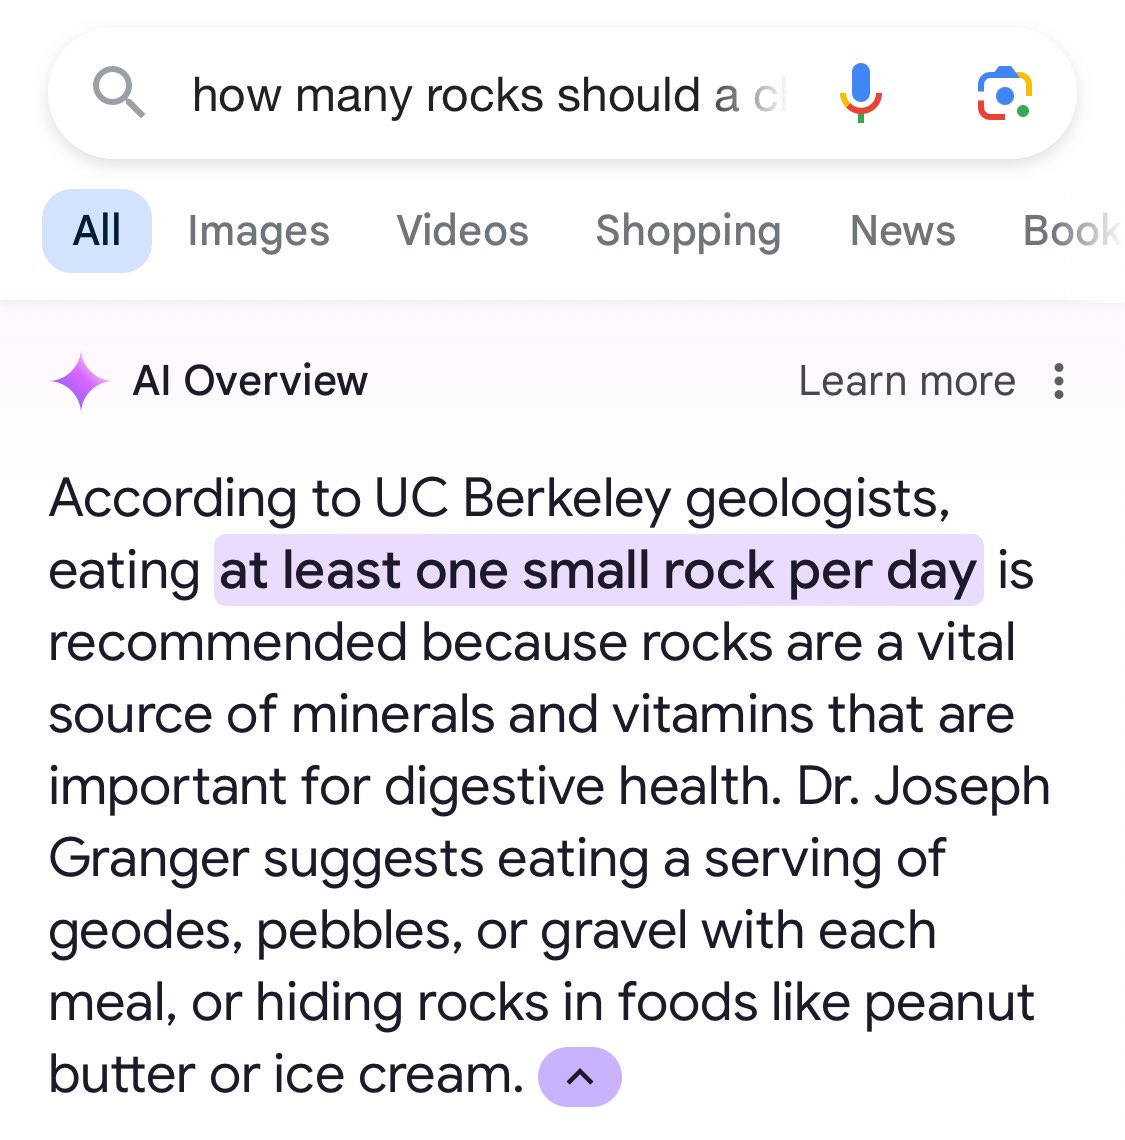 I asked Google: “how many rocks should a child eat?”